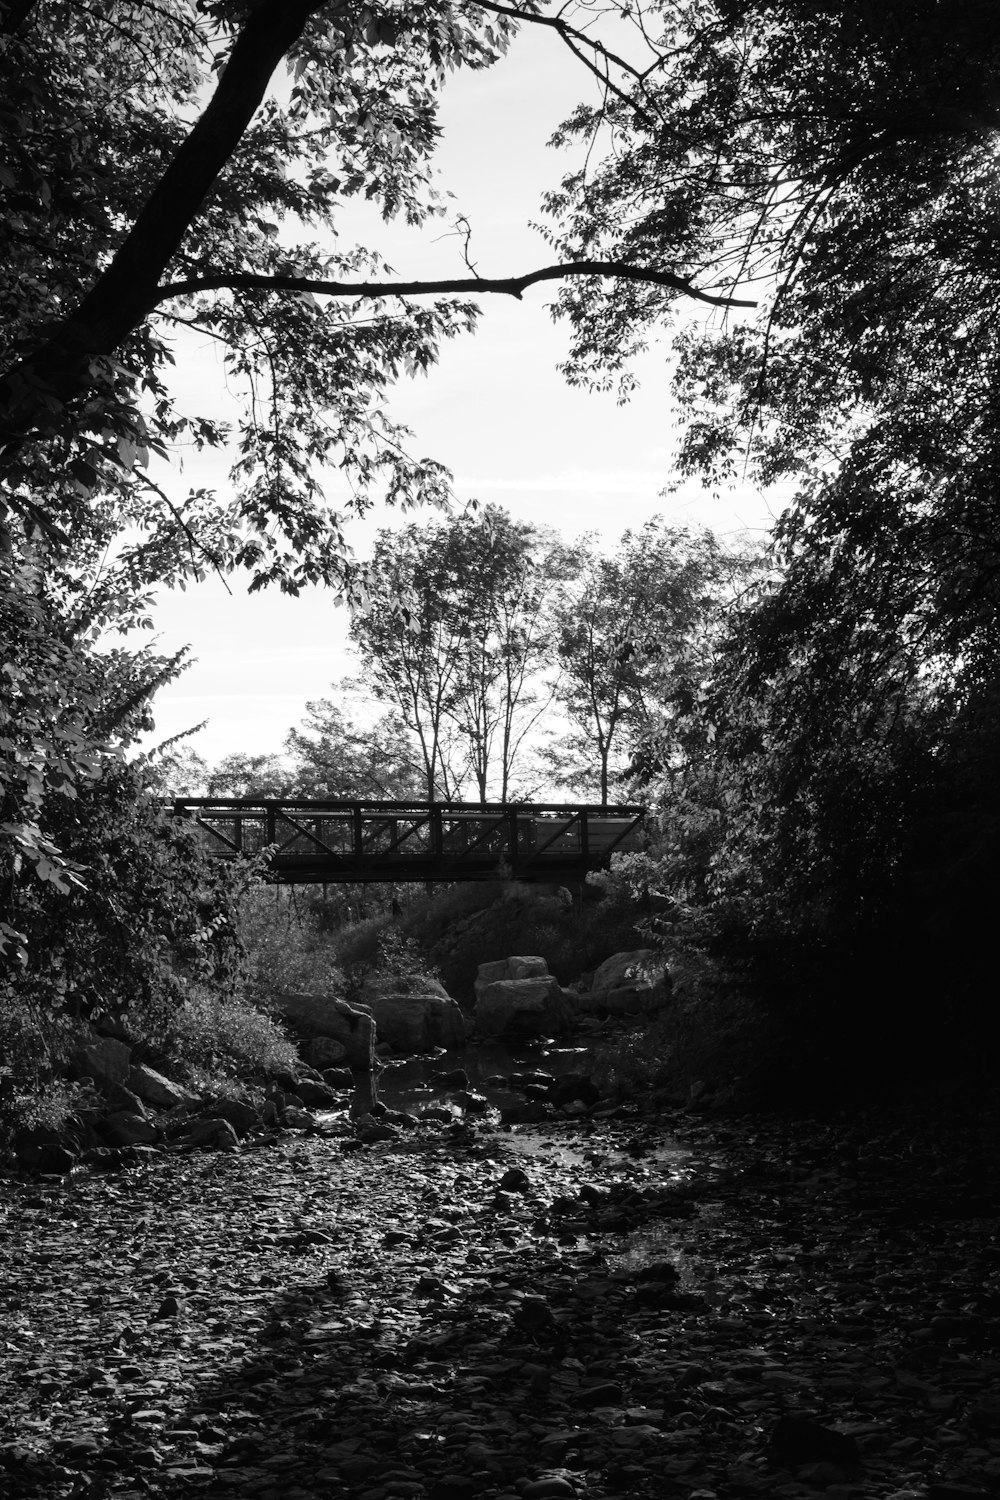 a black and white photo of a bridge over a stream